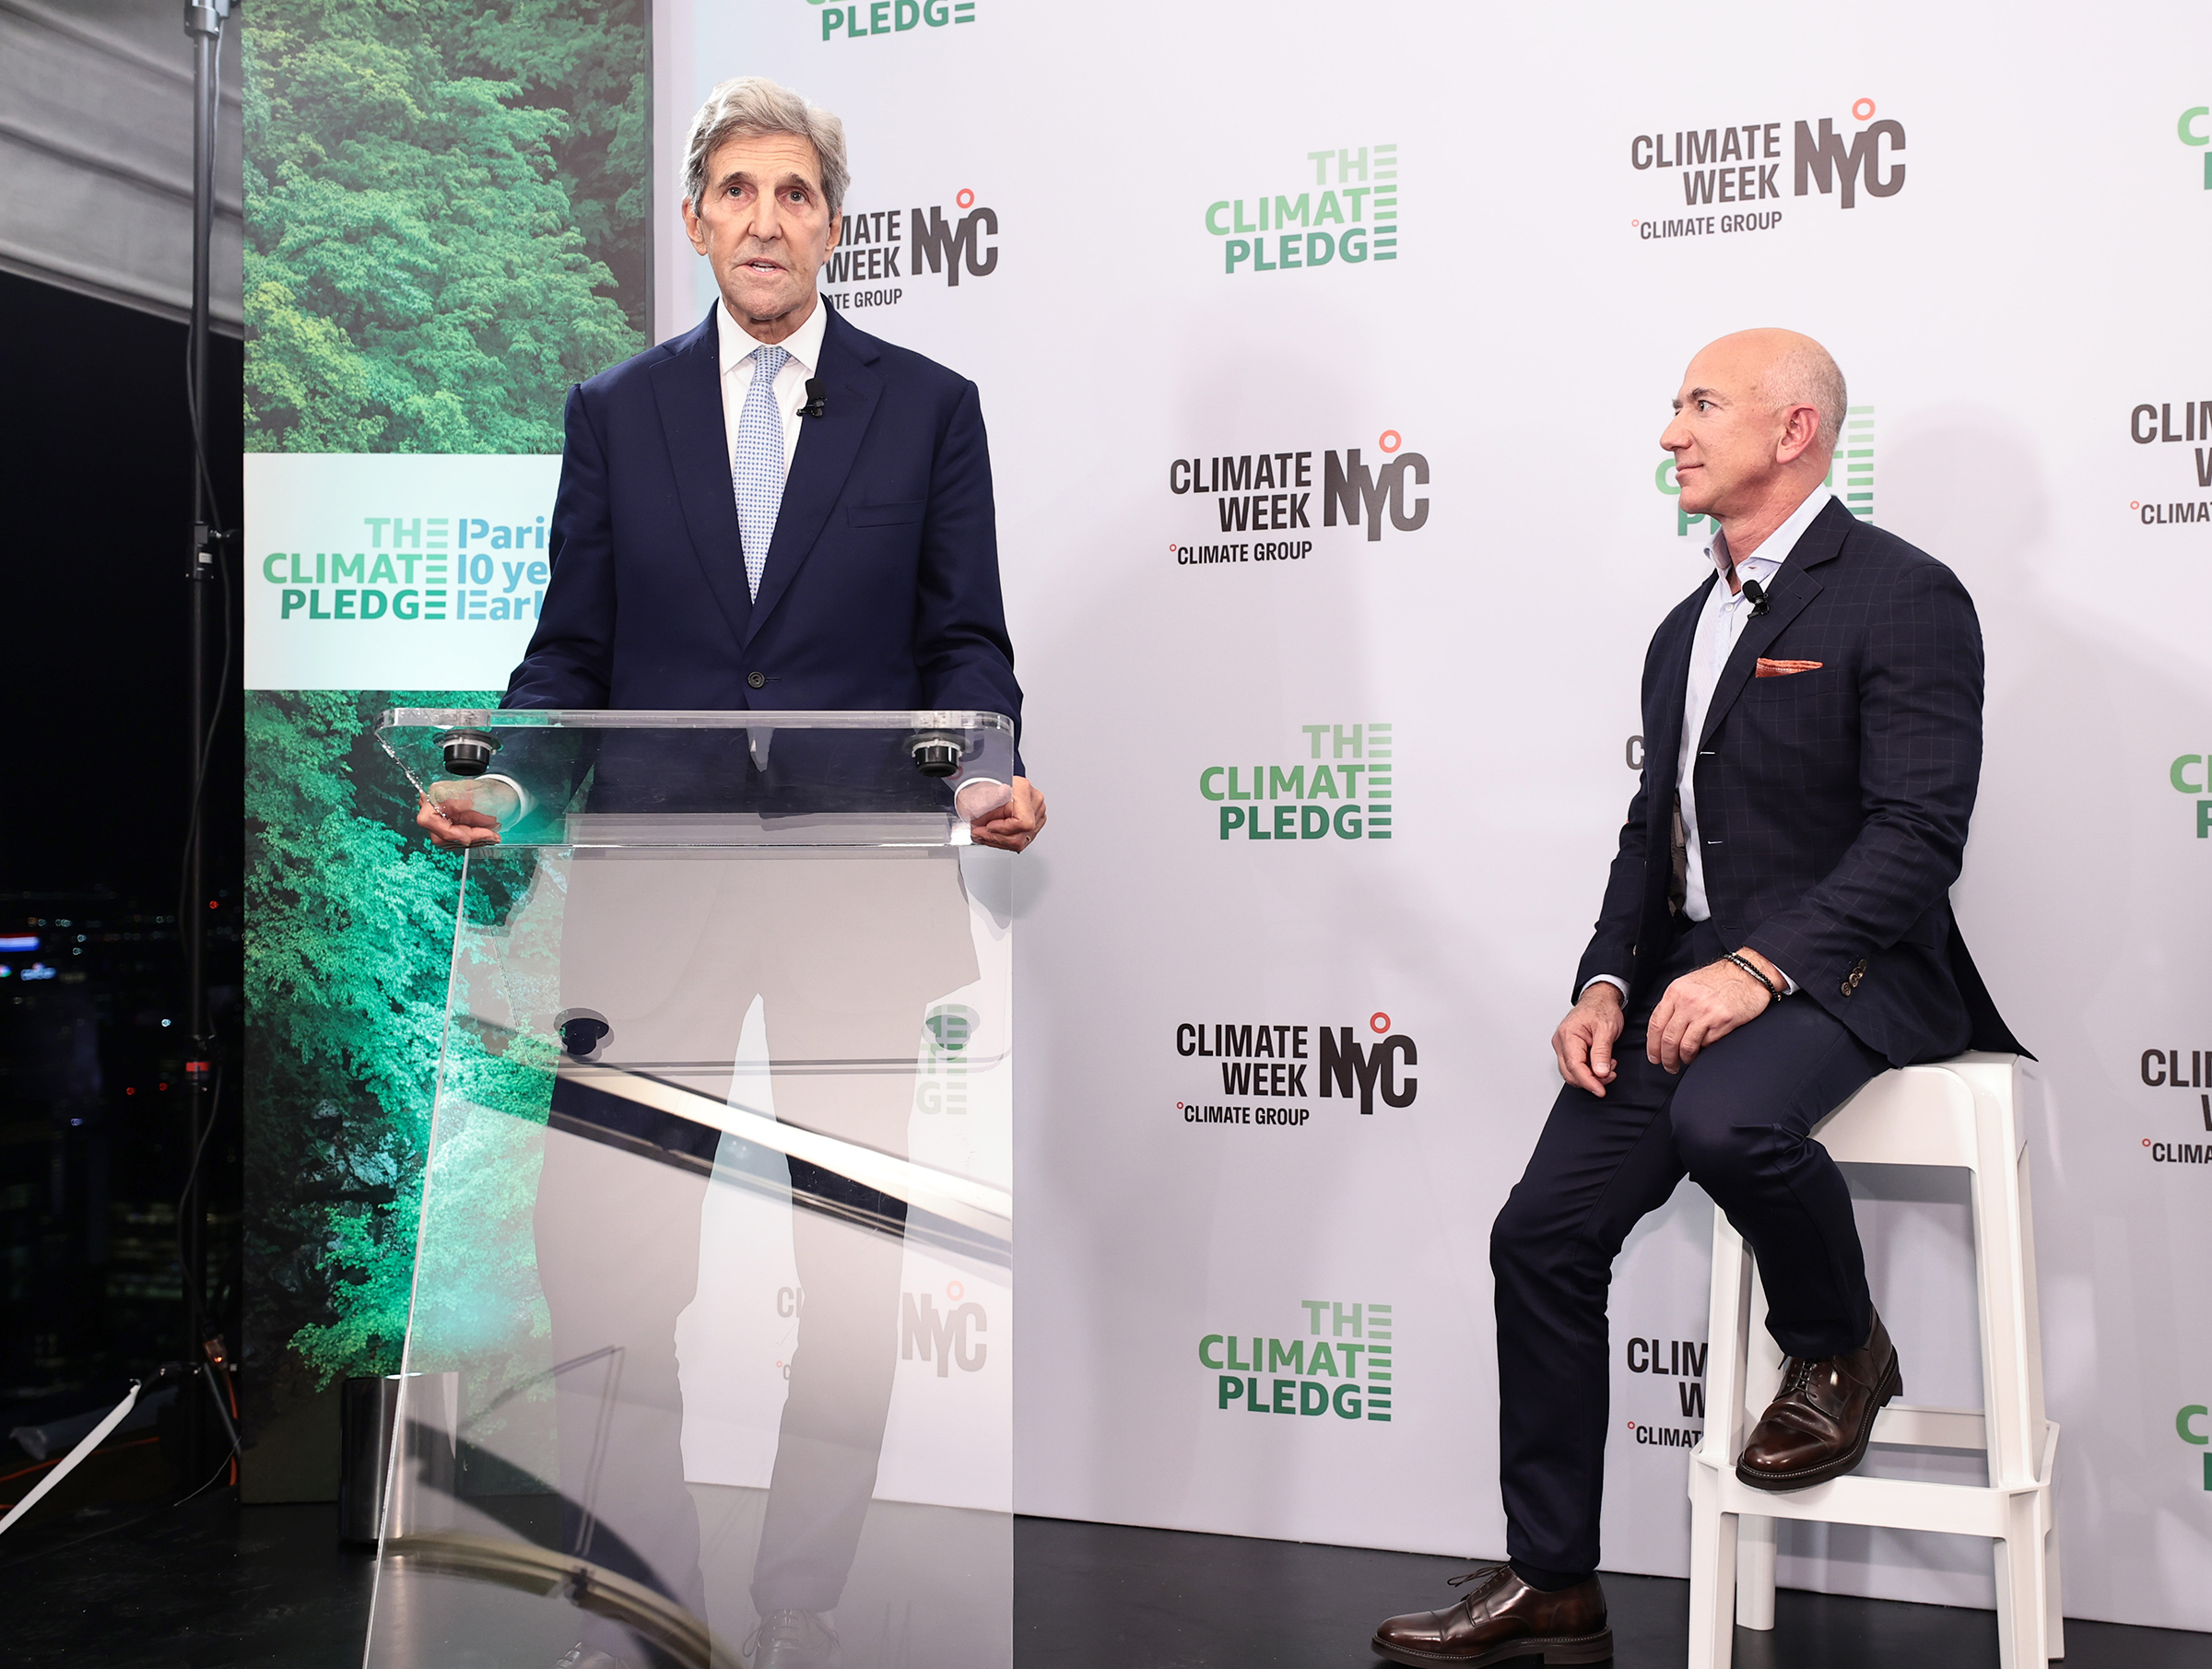 Kerry with Amazon founder Jeff Bezos